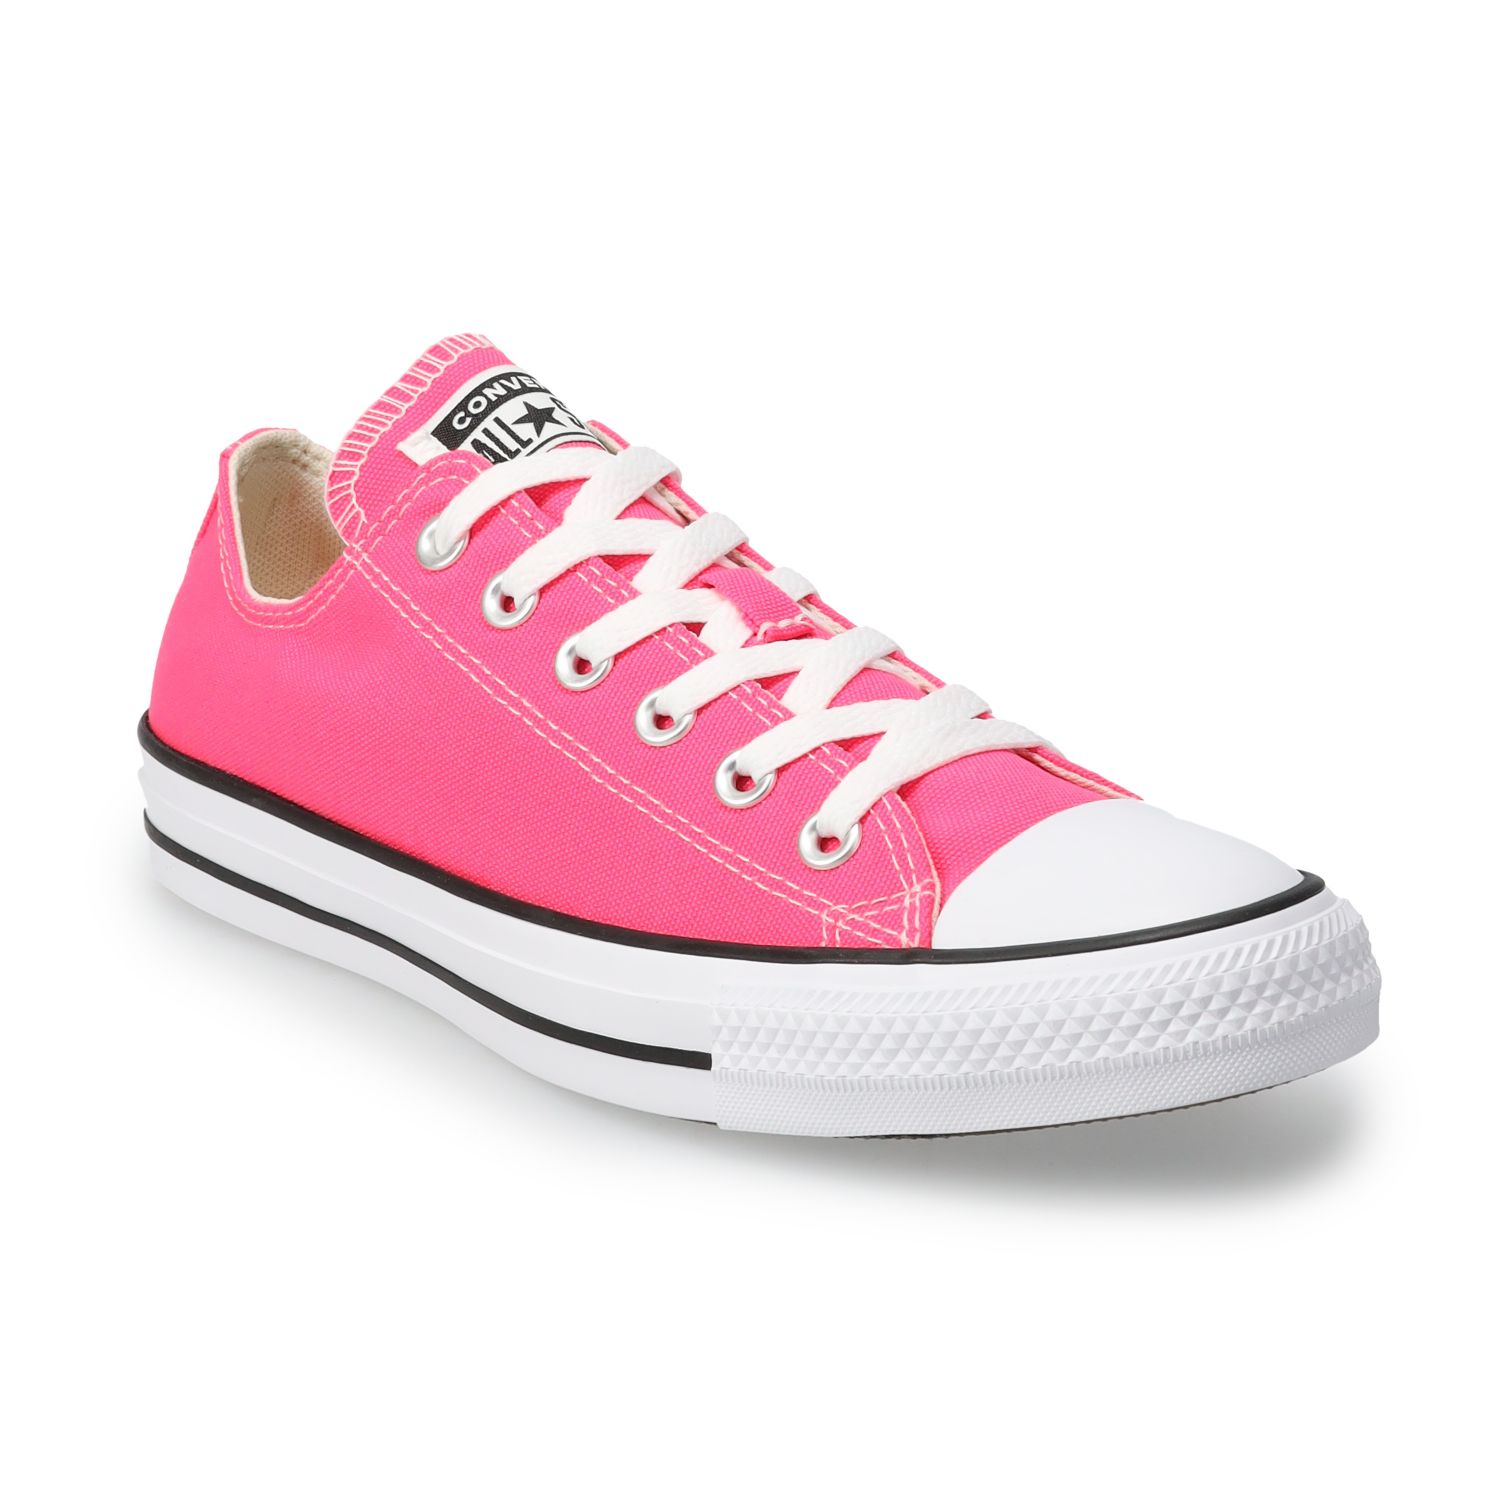 pink converse size 13